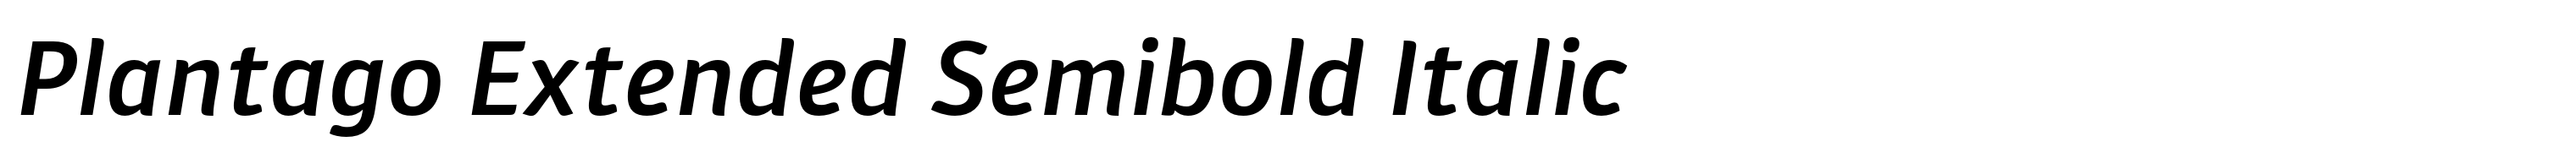 Plantago Extended Semibold Italic